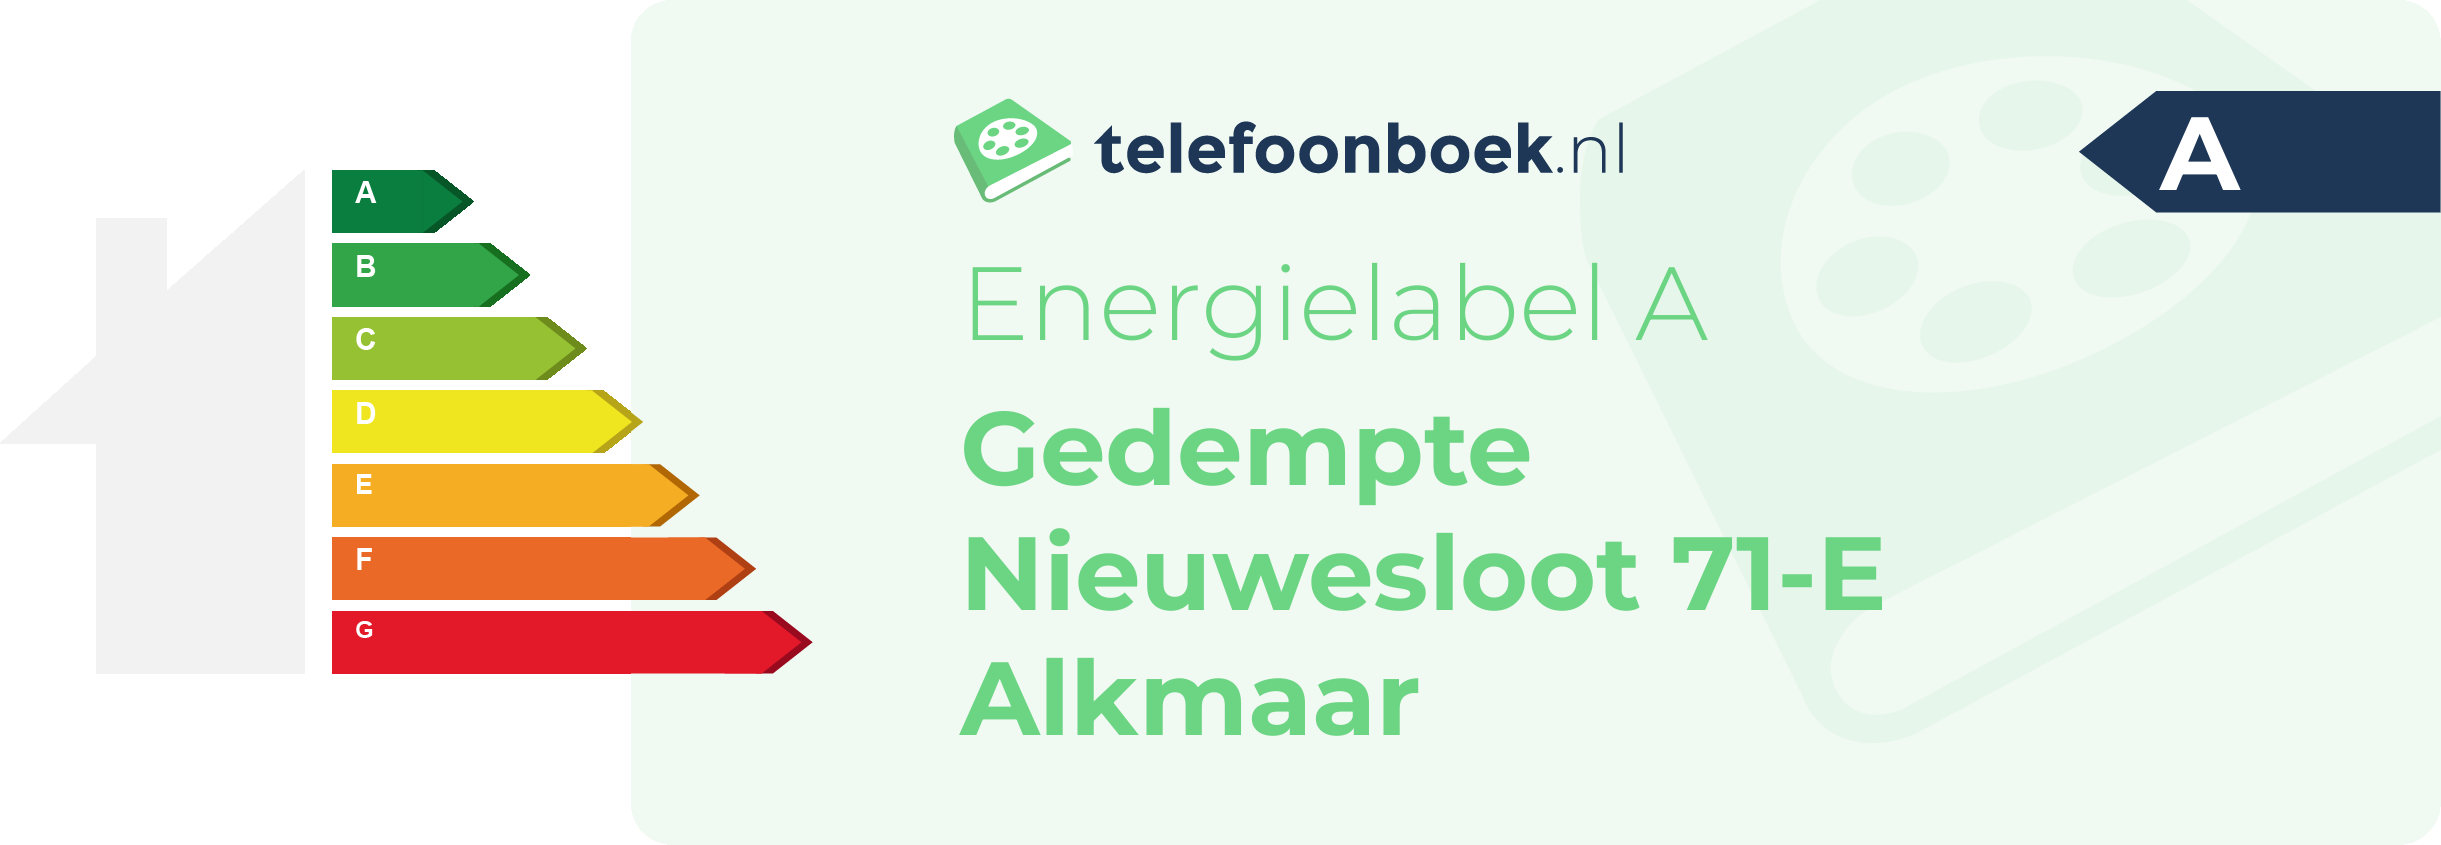 Energielabel Gedempte Nieuwesloot 71-E Alkmaar